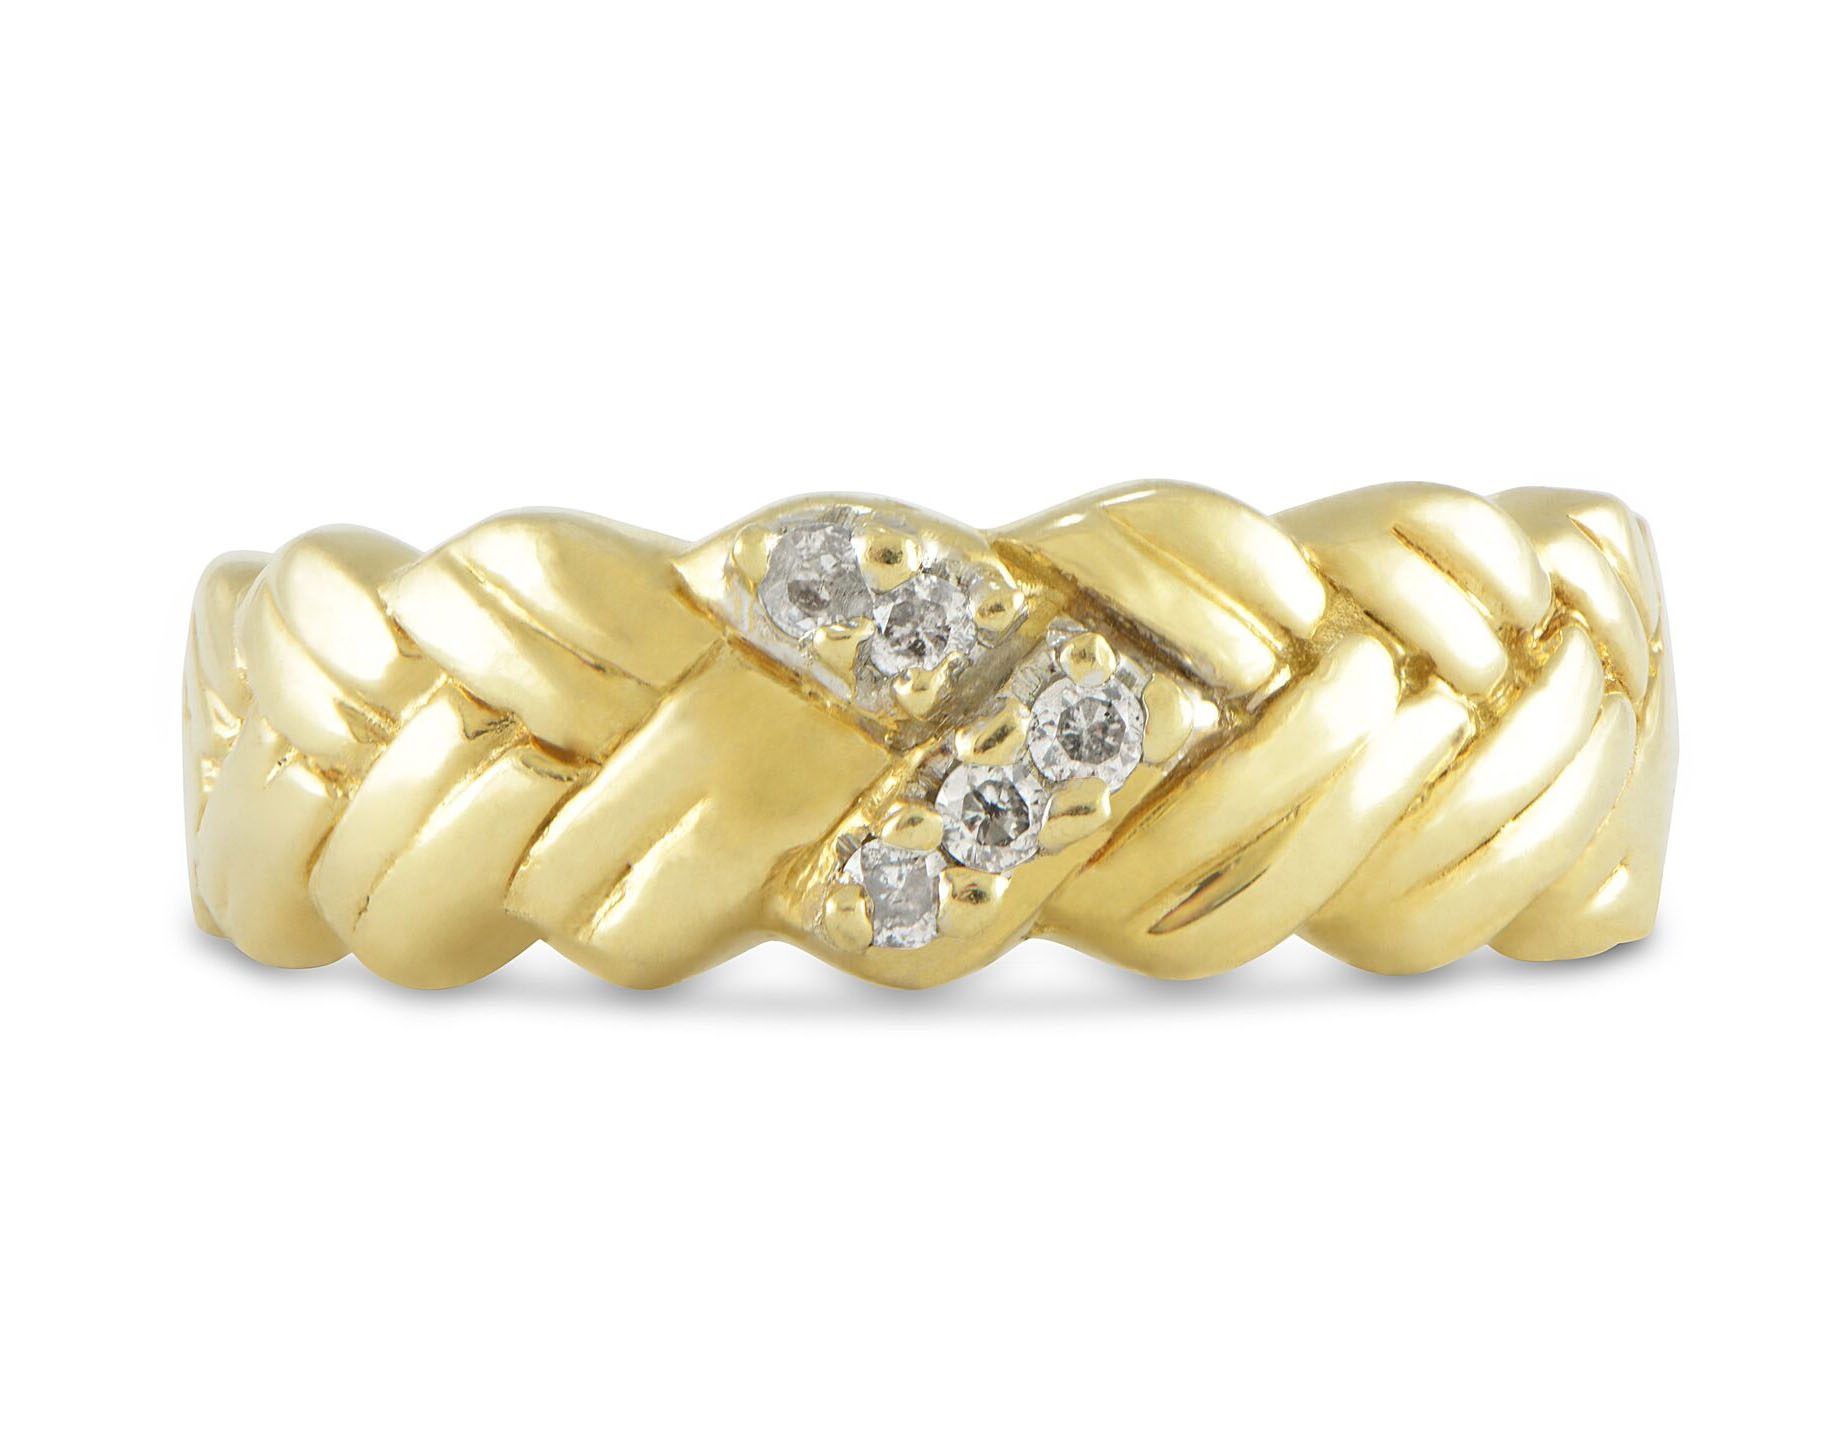 14k-Yellow-Gold-Diamond-Ring-10ct-TW-Size-65-Womens-Bead-Set-Braided-Band-132237349098